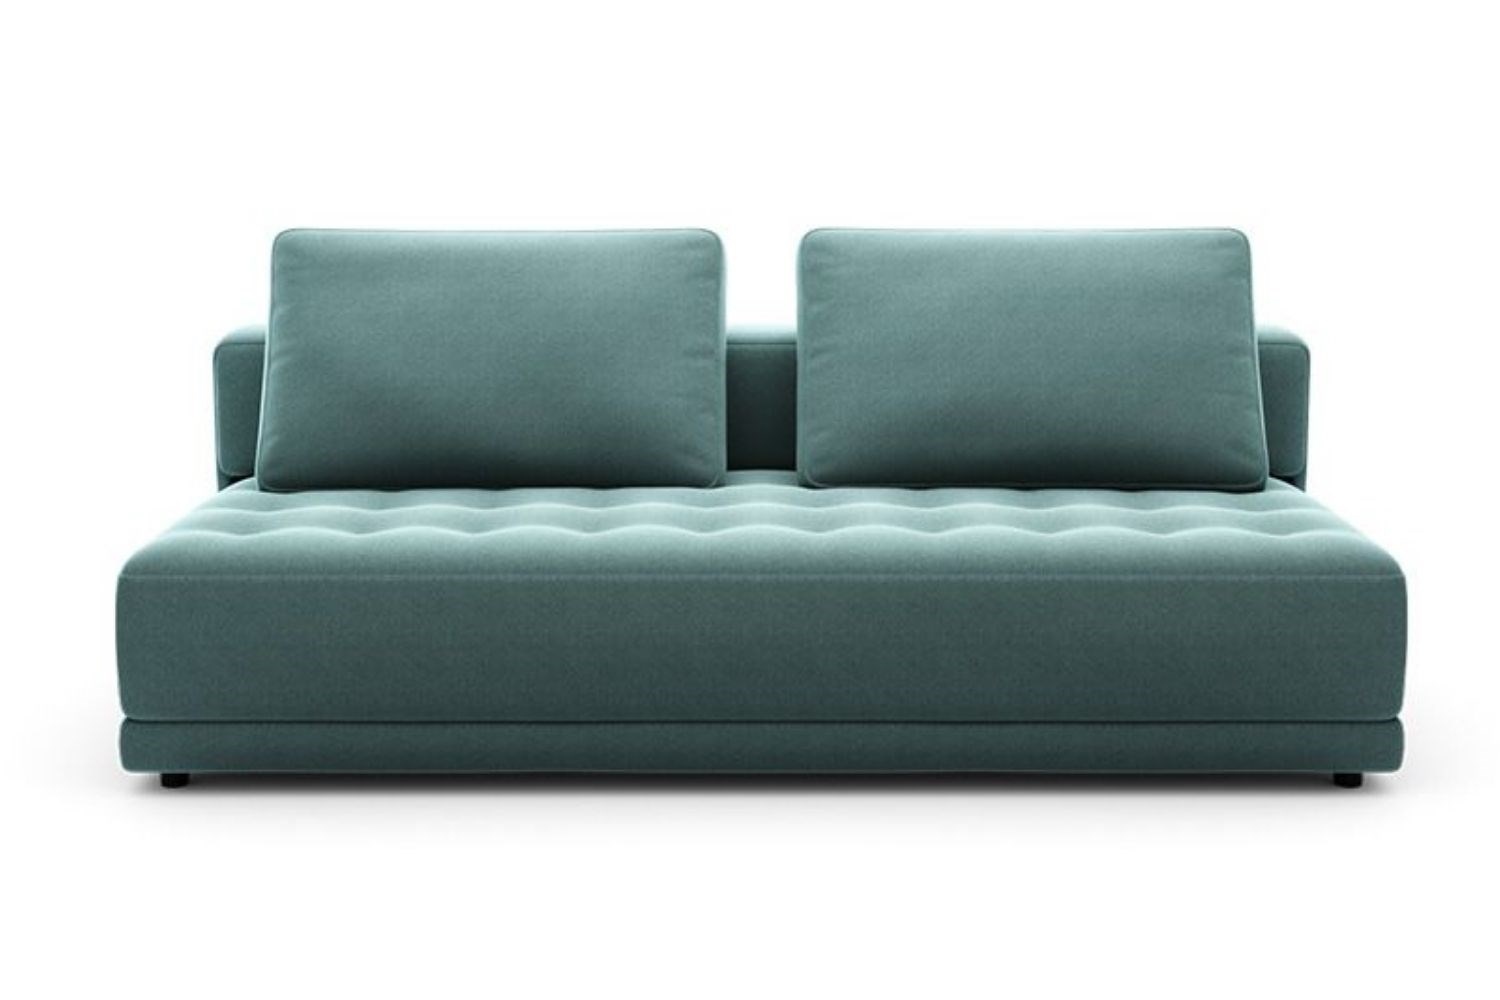 quality sofa bed australia